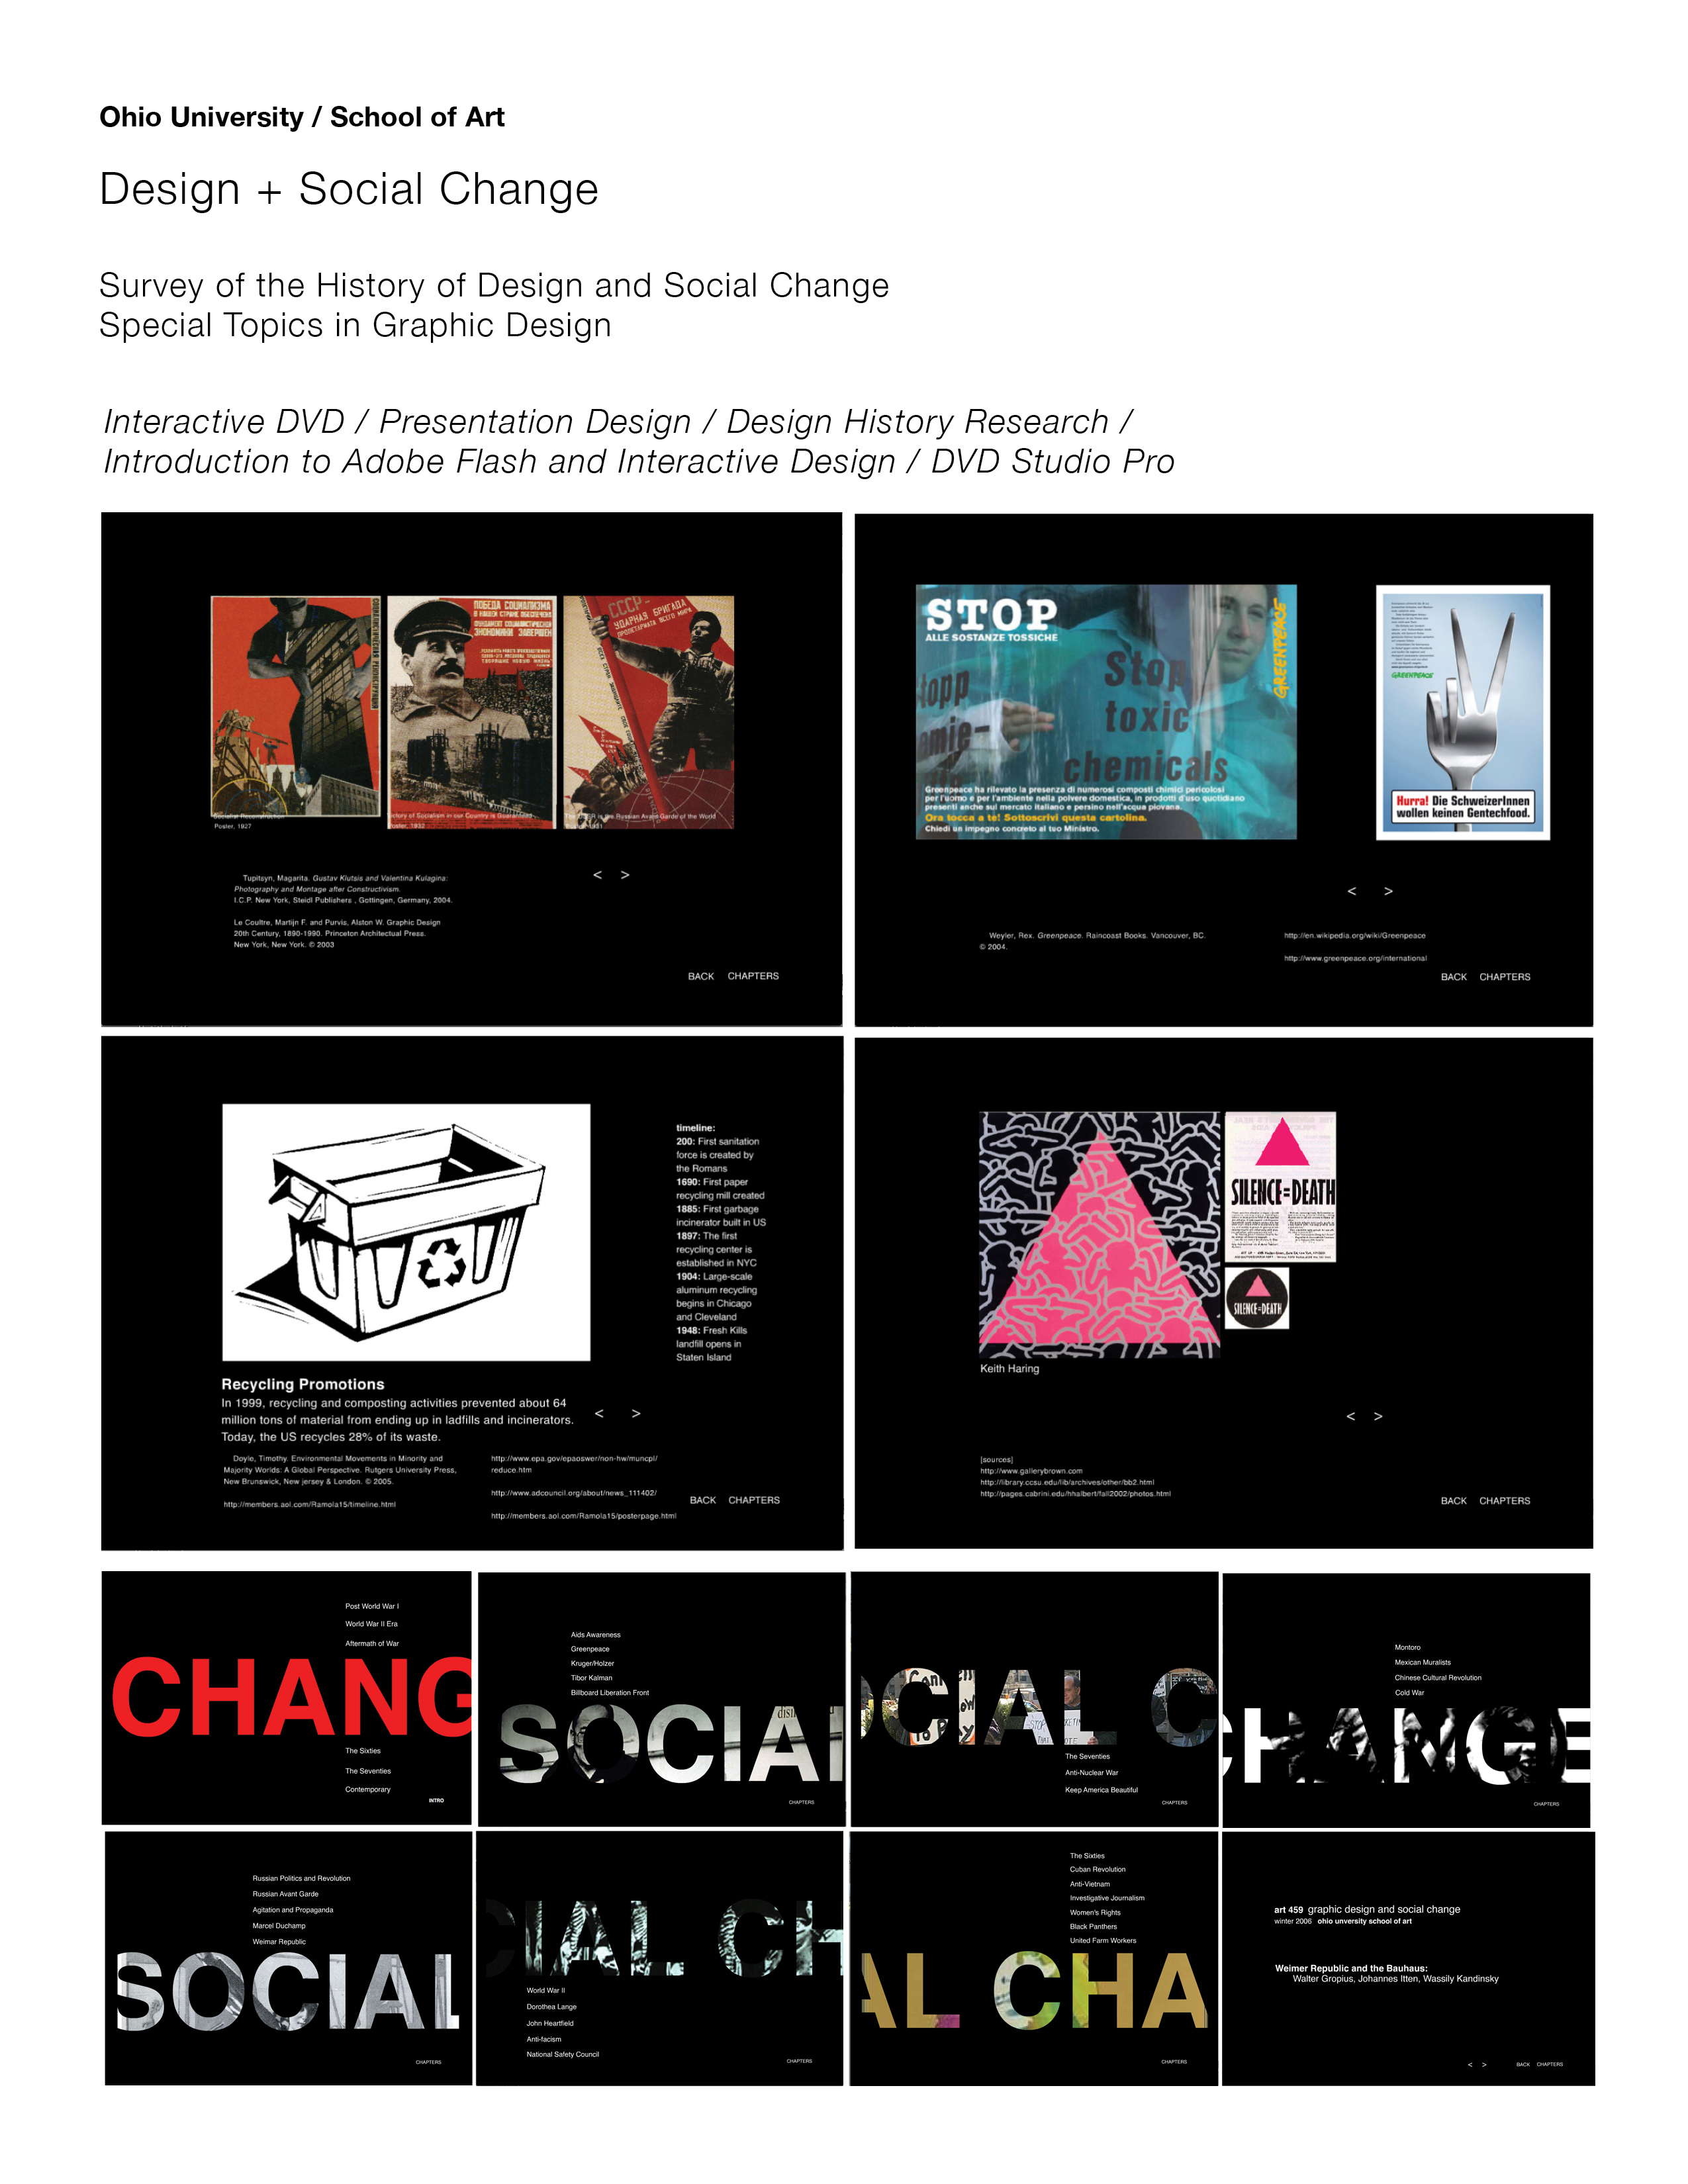 Design + Social Change / Ohio University School of Art